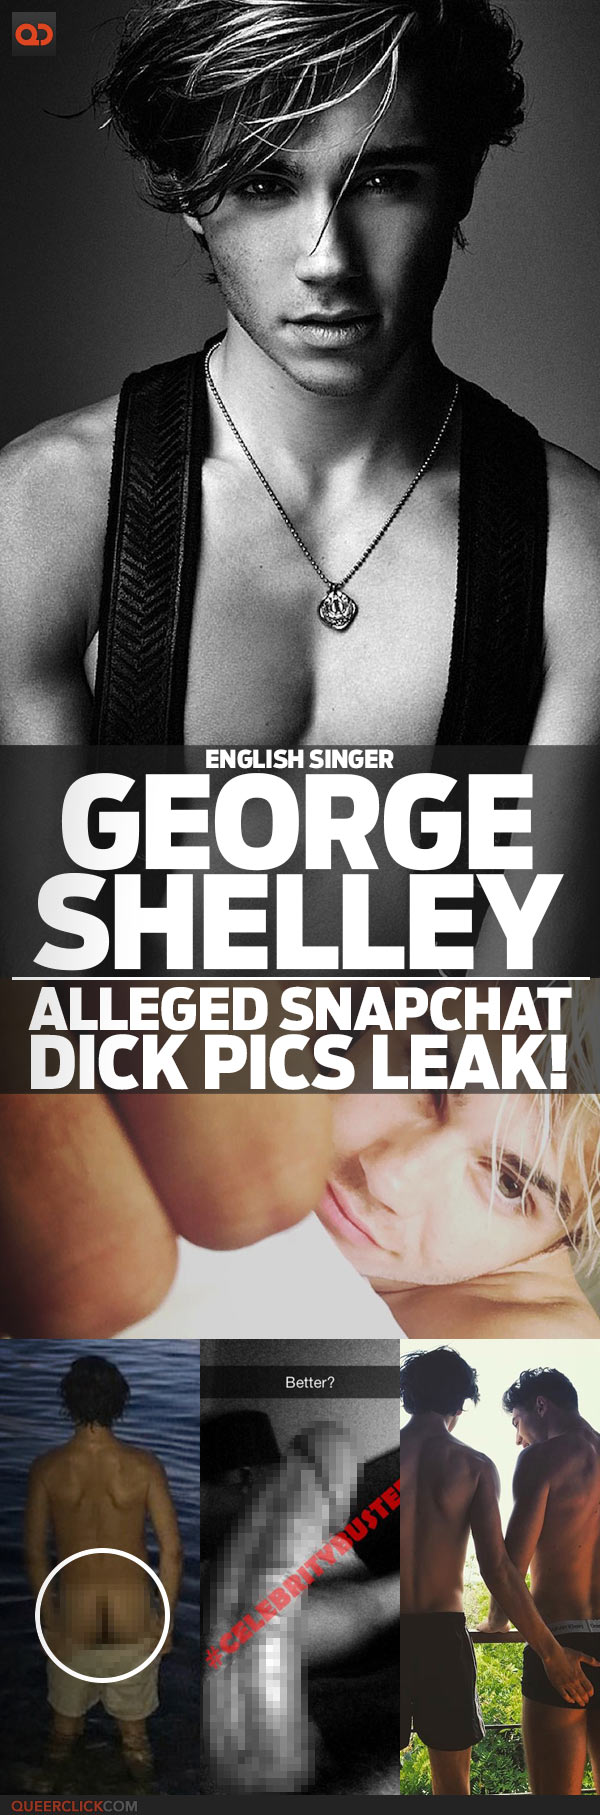 George Shelley, English Singer, Alleged Snapchat Dick Pics Leak!